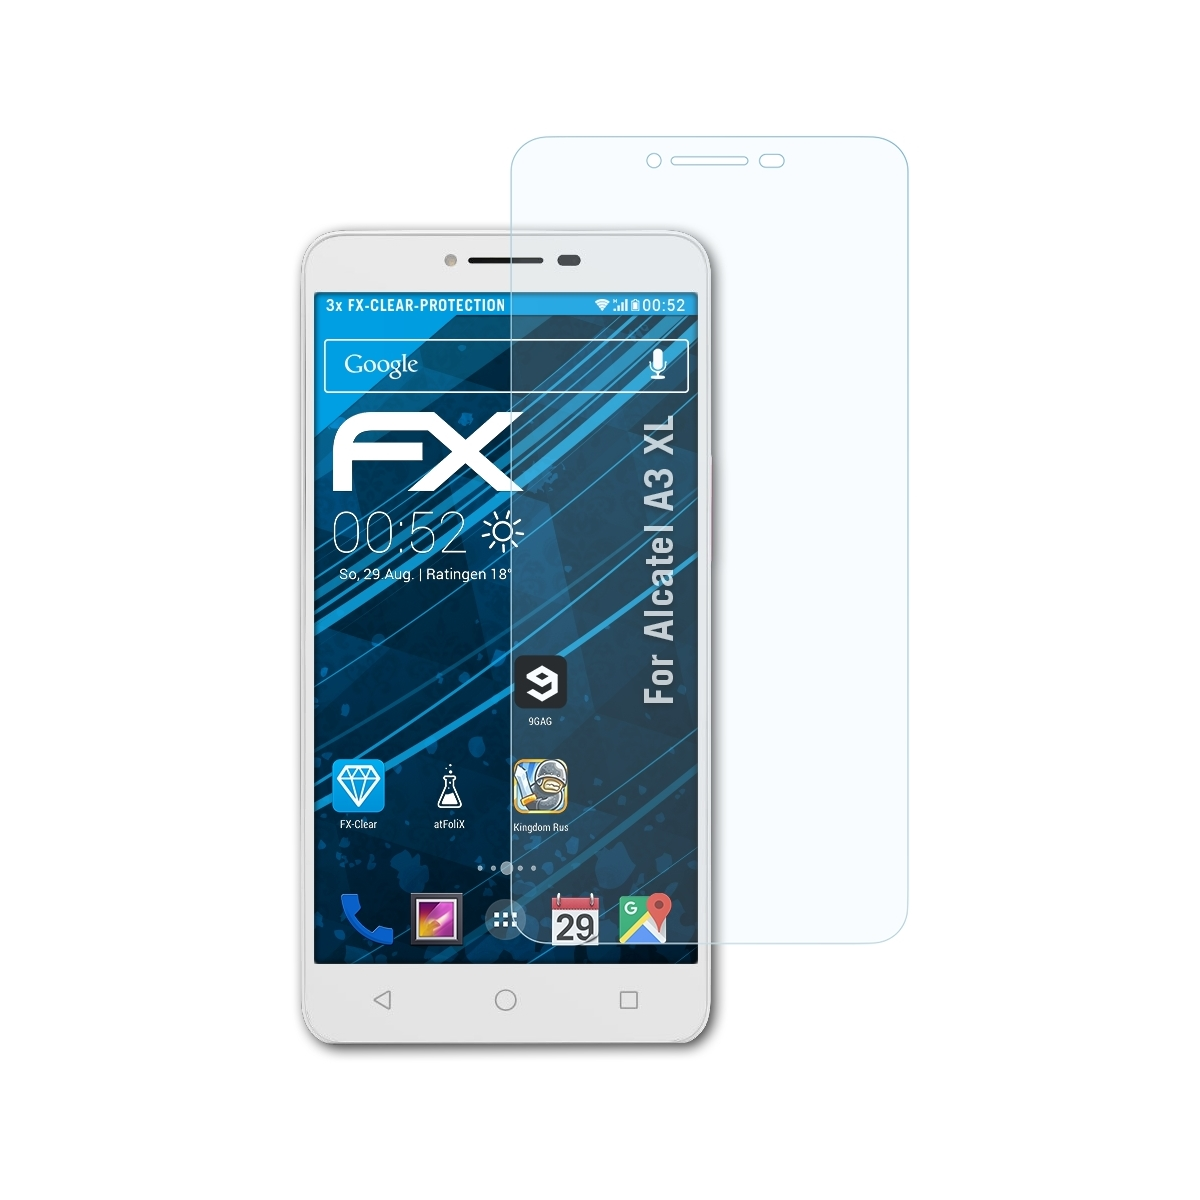 3x Alcatel ATFOLIX FX-Clear Displayschutz(für A3 XL)